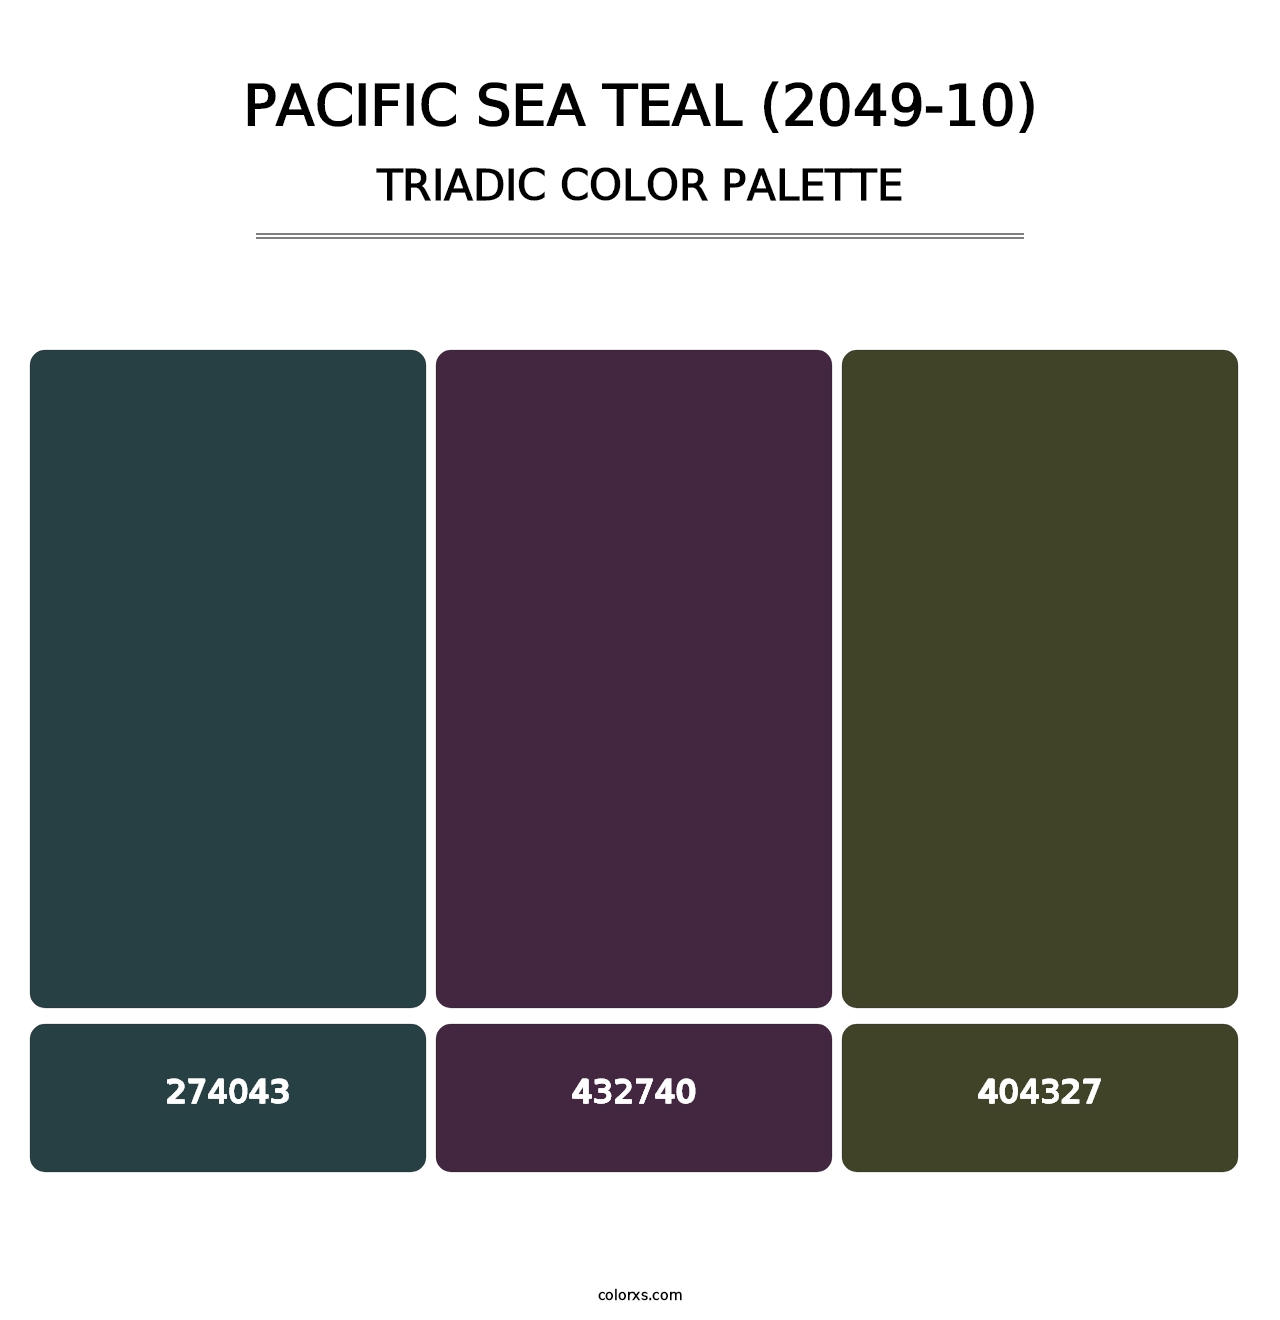 Pacific Sea Teal (2049-10) - Triadic Color Palette